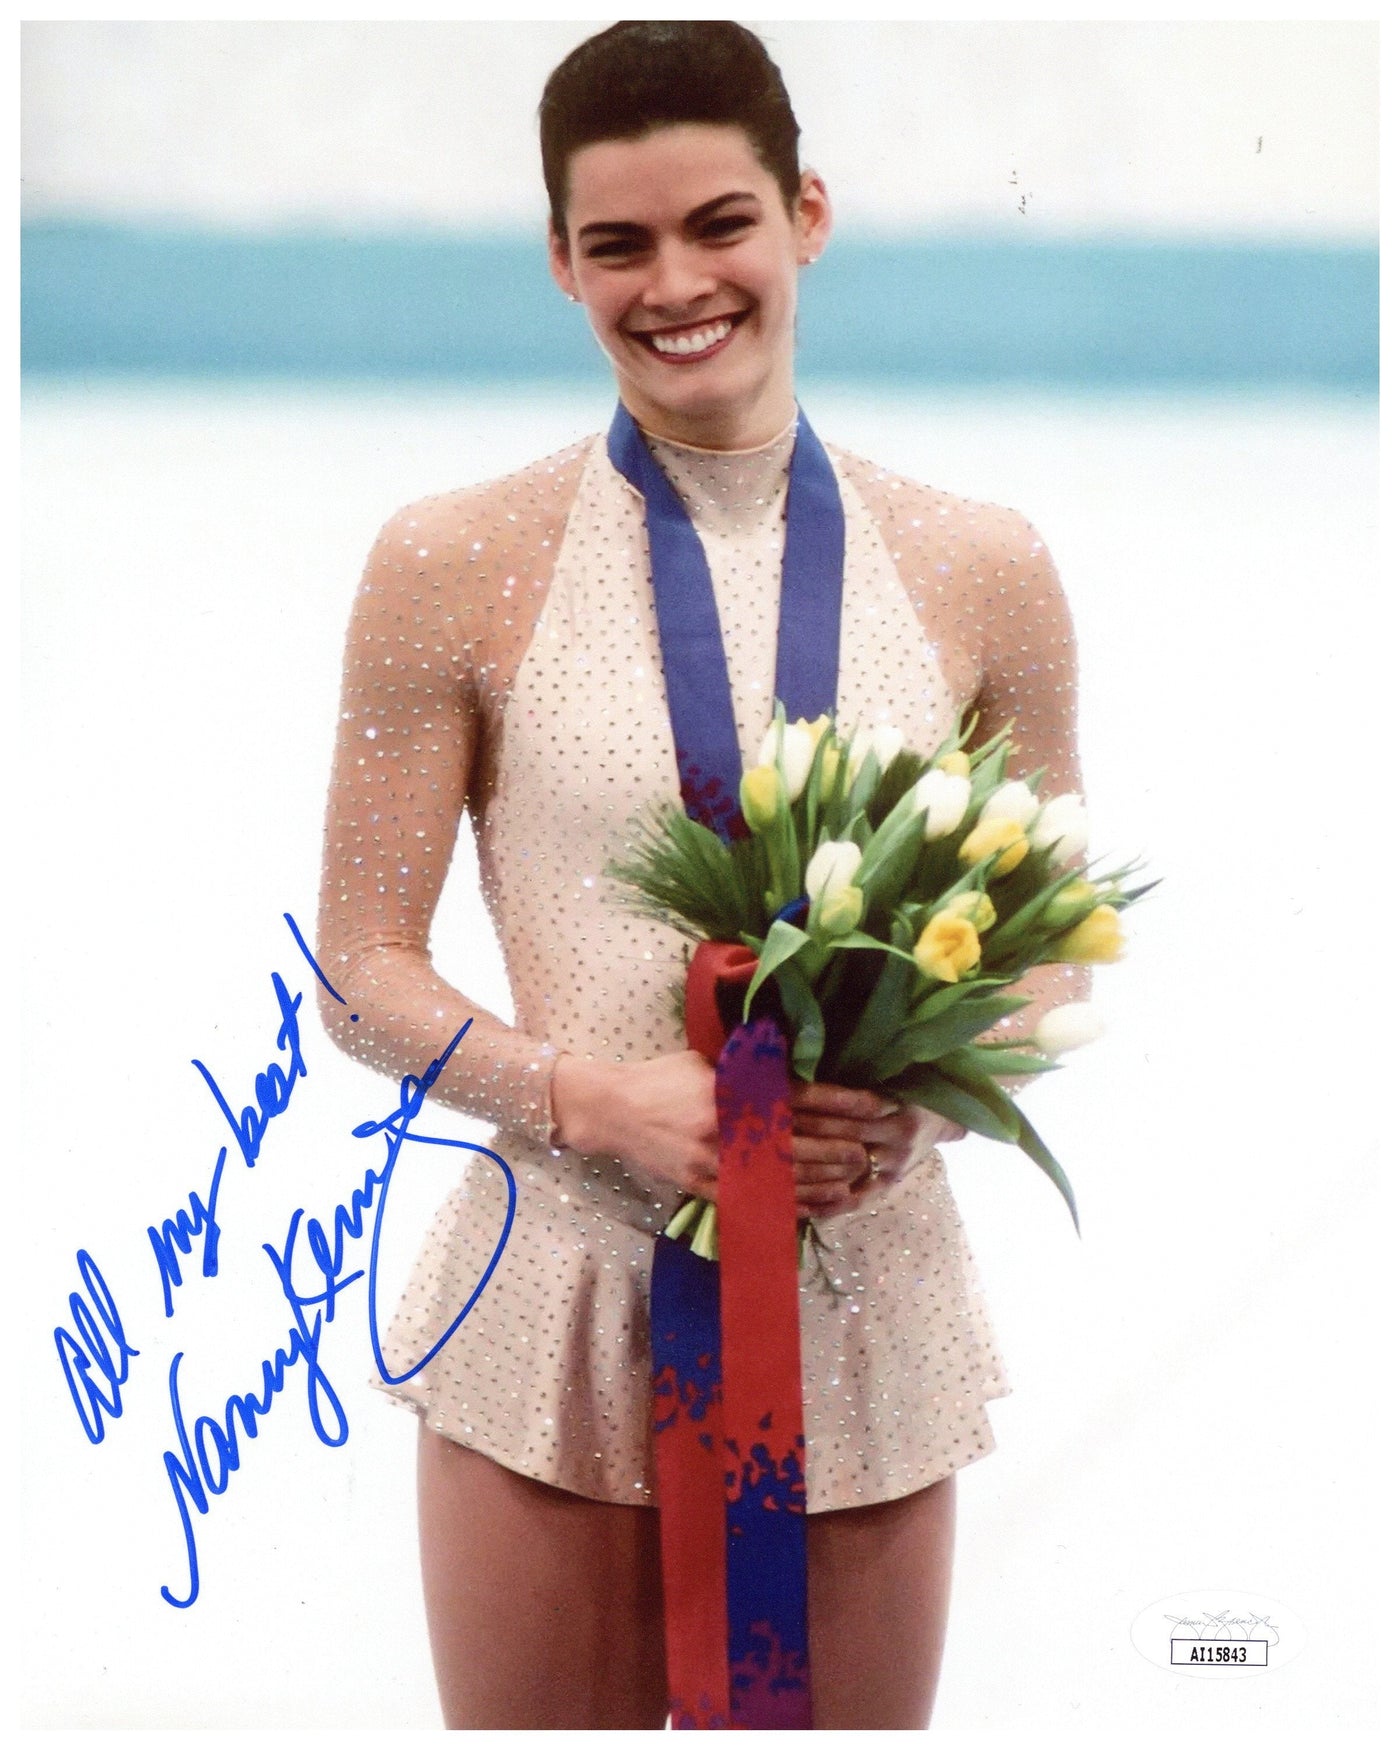 SPECIAL Nancy Kerrigan Signed 8x10 Photo American Figure Skater Autographed JSA COA Pose 3